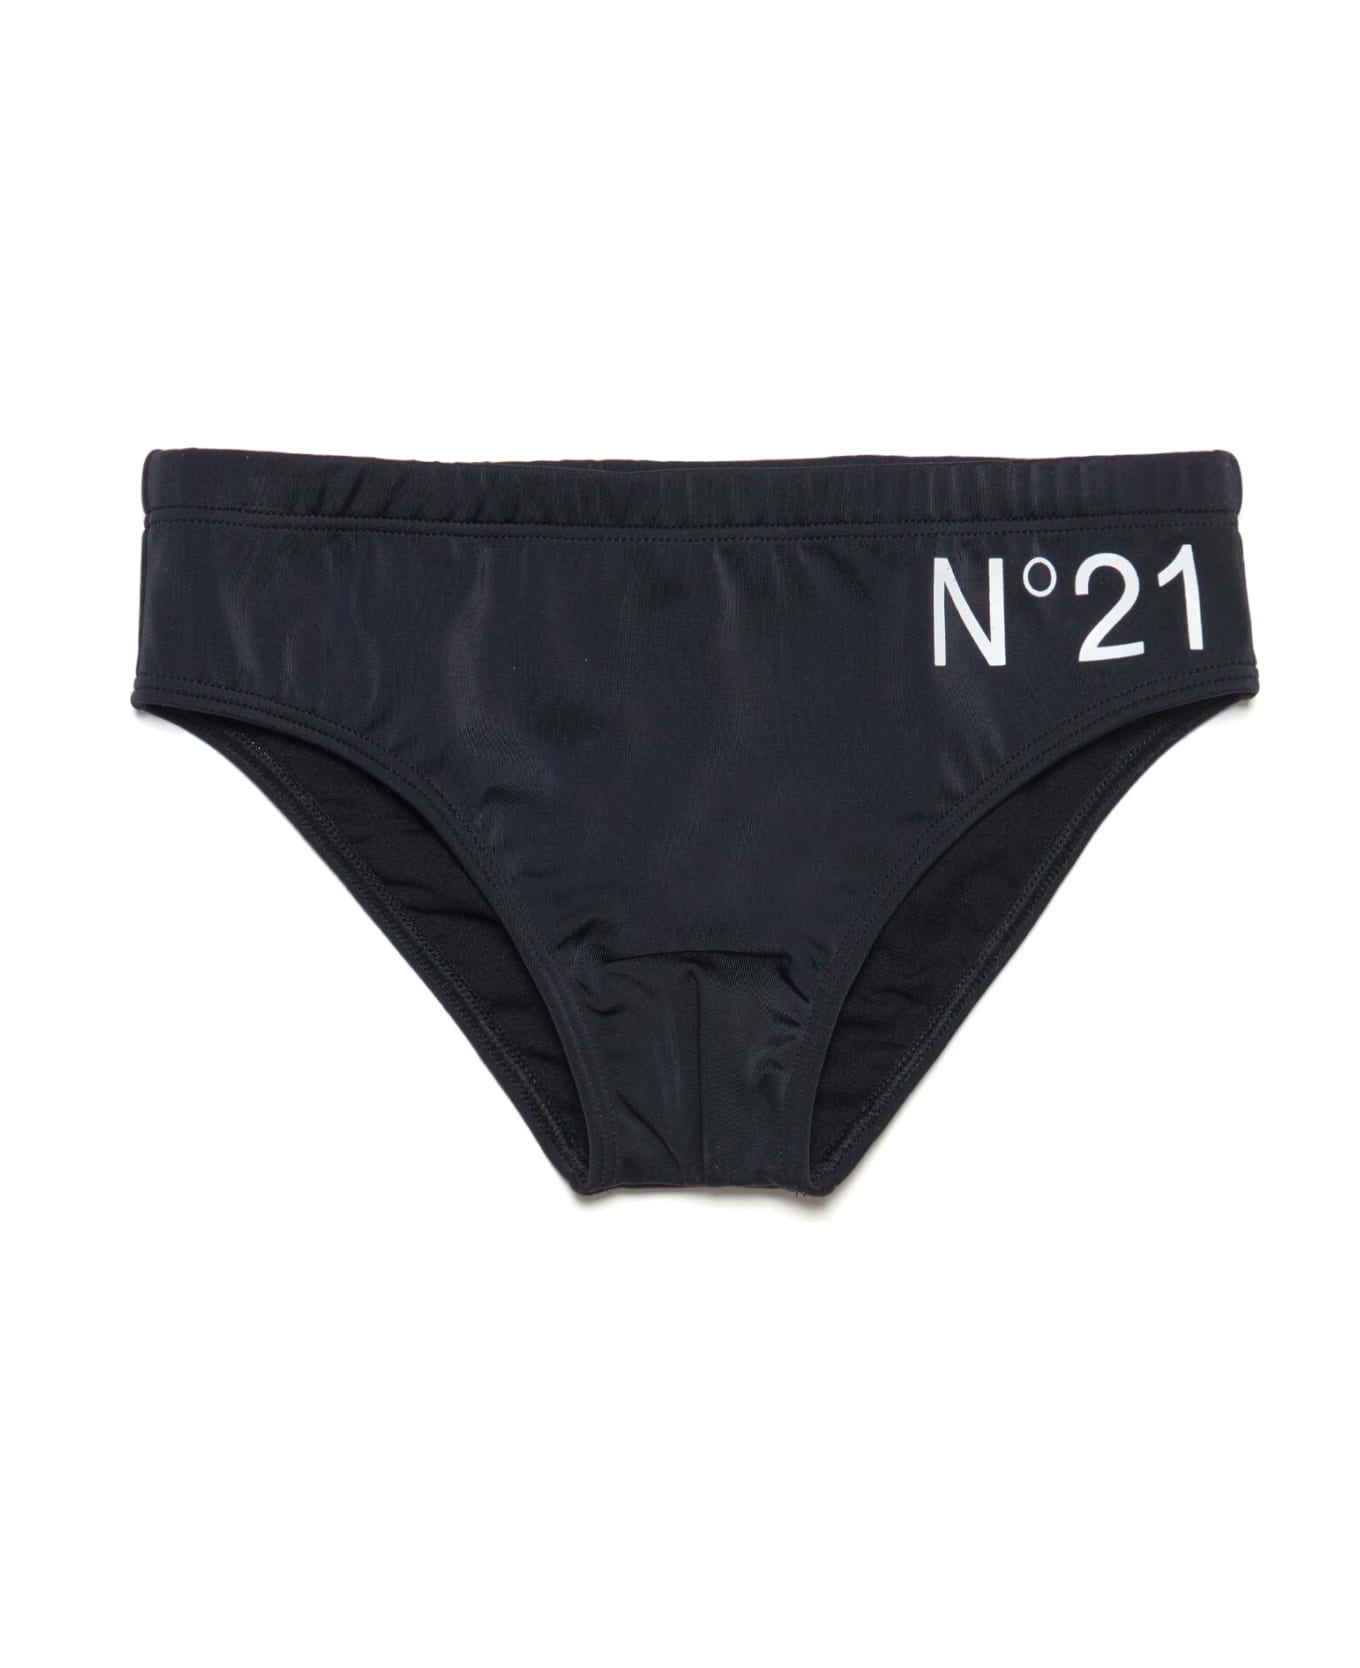 N.21 N21m19m Sw Boxer N°21 Black Lycra Swim Brief With Logo - Black